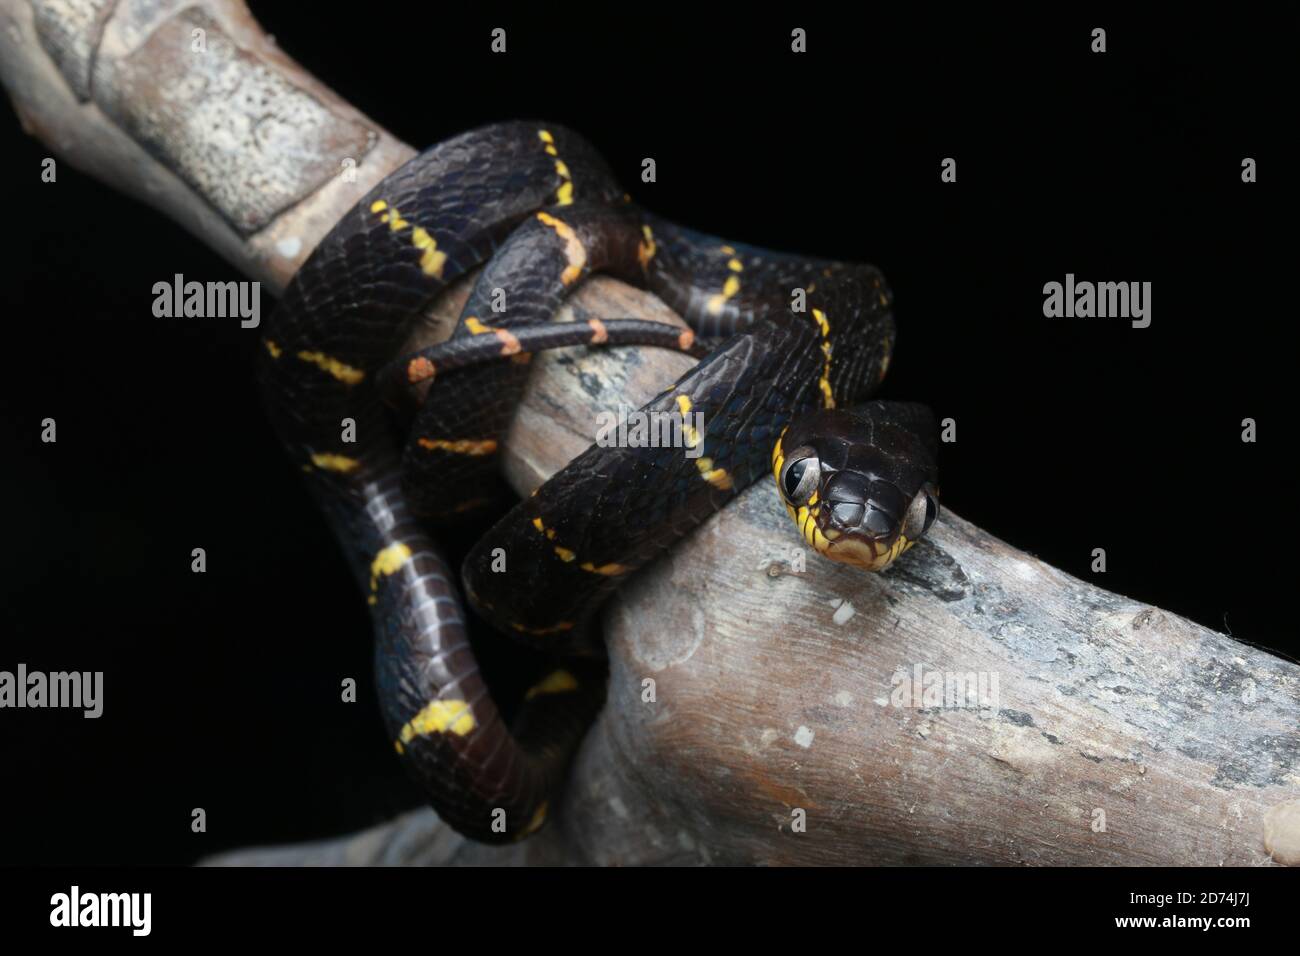 Mangrovie gatto serpente o Boiga melanota poggiato sul ramo. Foto Stock